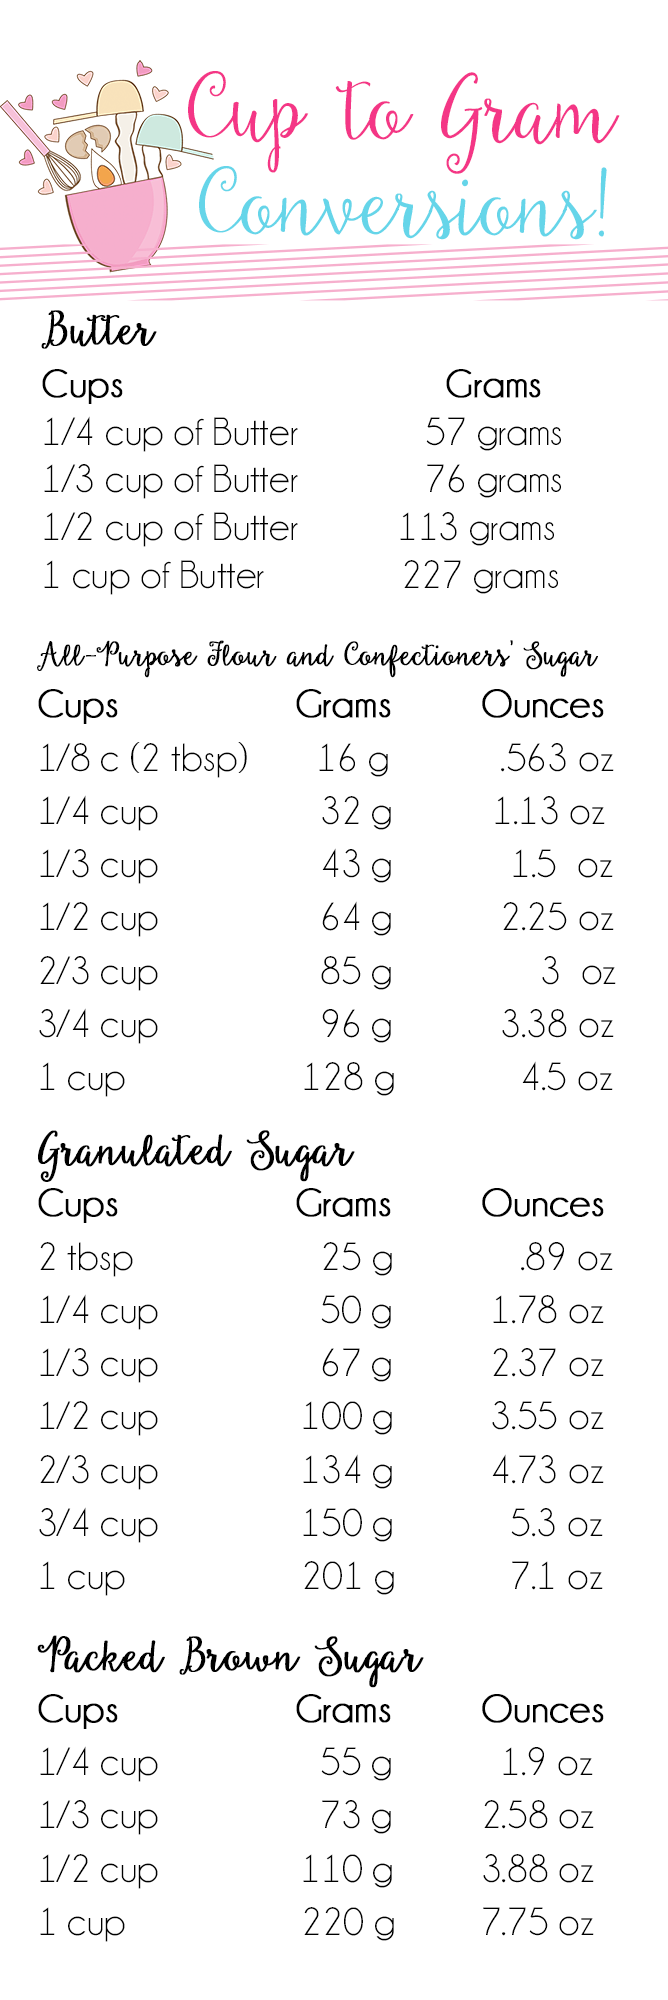 1/3rd cup in grams